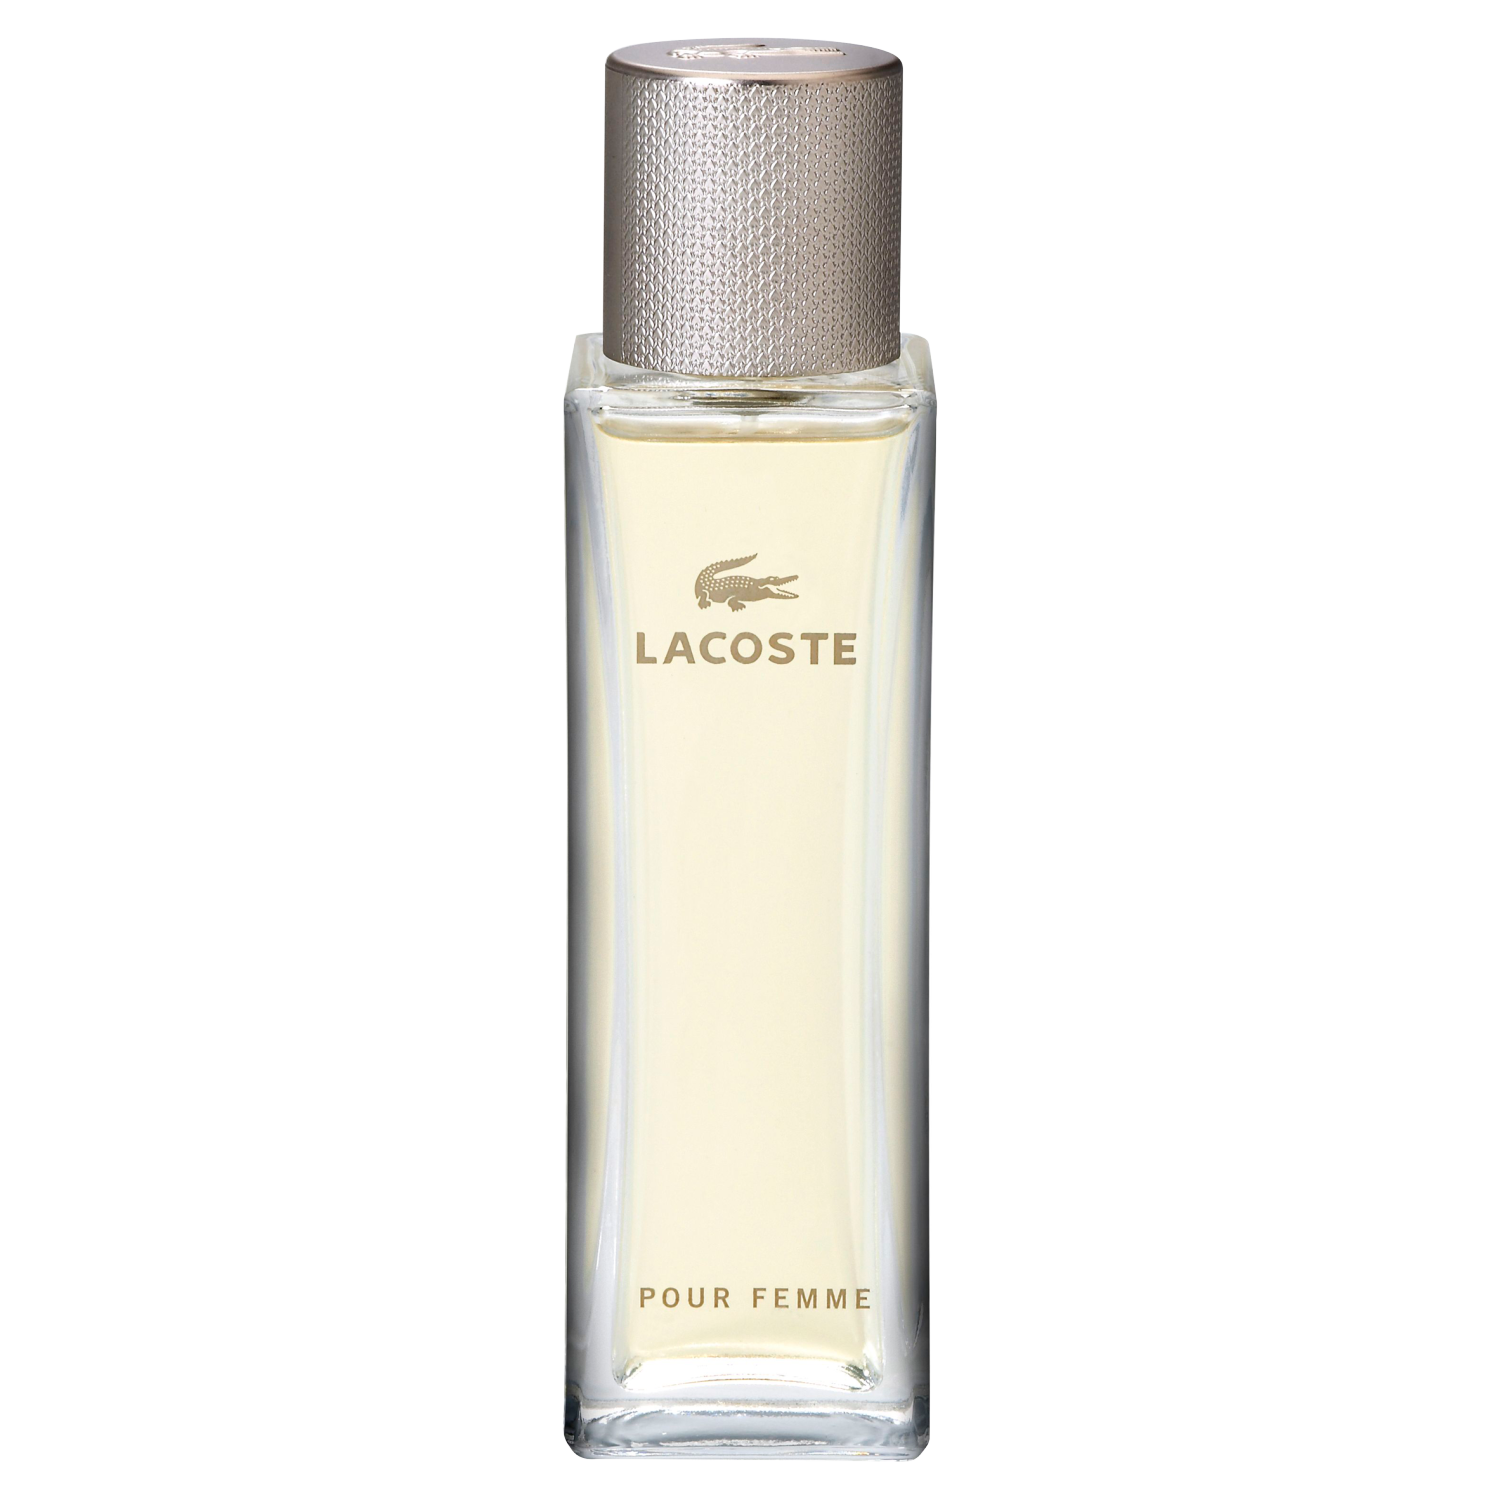 Lacoste Pour Femme woda perfumowana damska, 30 ml | hebe.pl